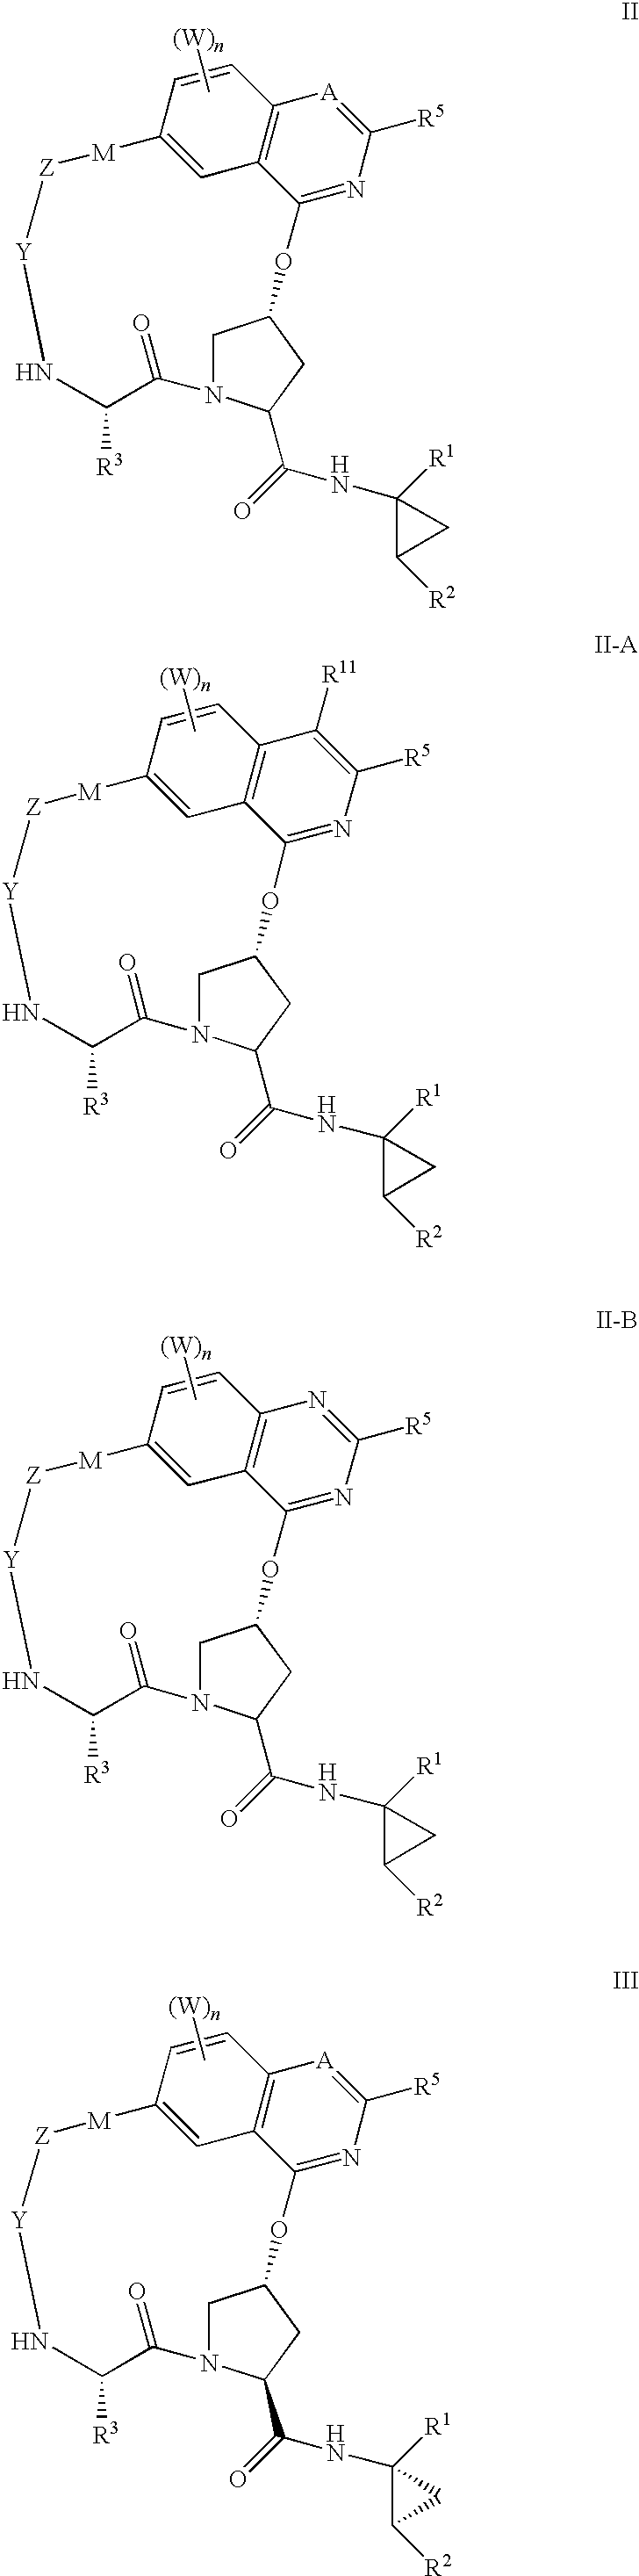 HCV NS3 protease inhibitors